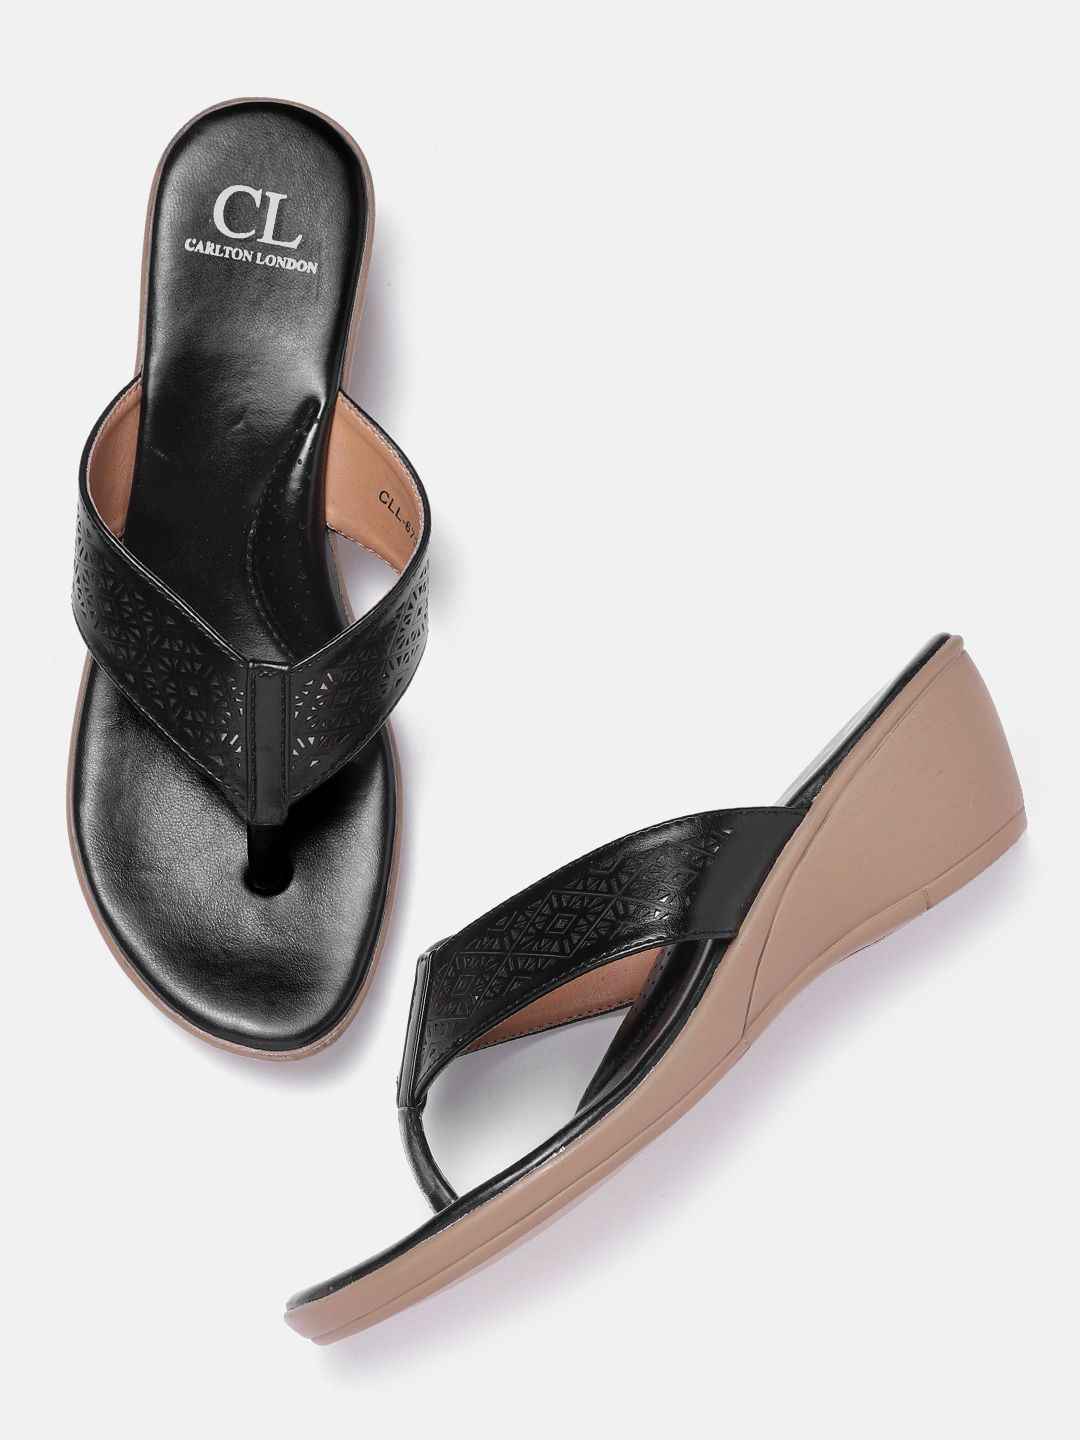 Carlton London Women Black Wedge Heels with Laser Cuts Price in India